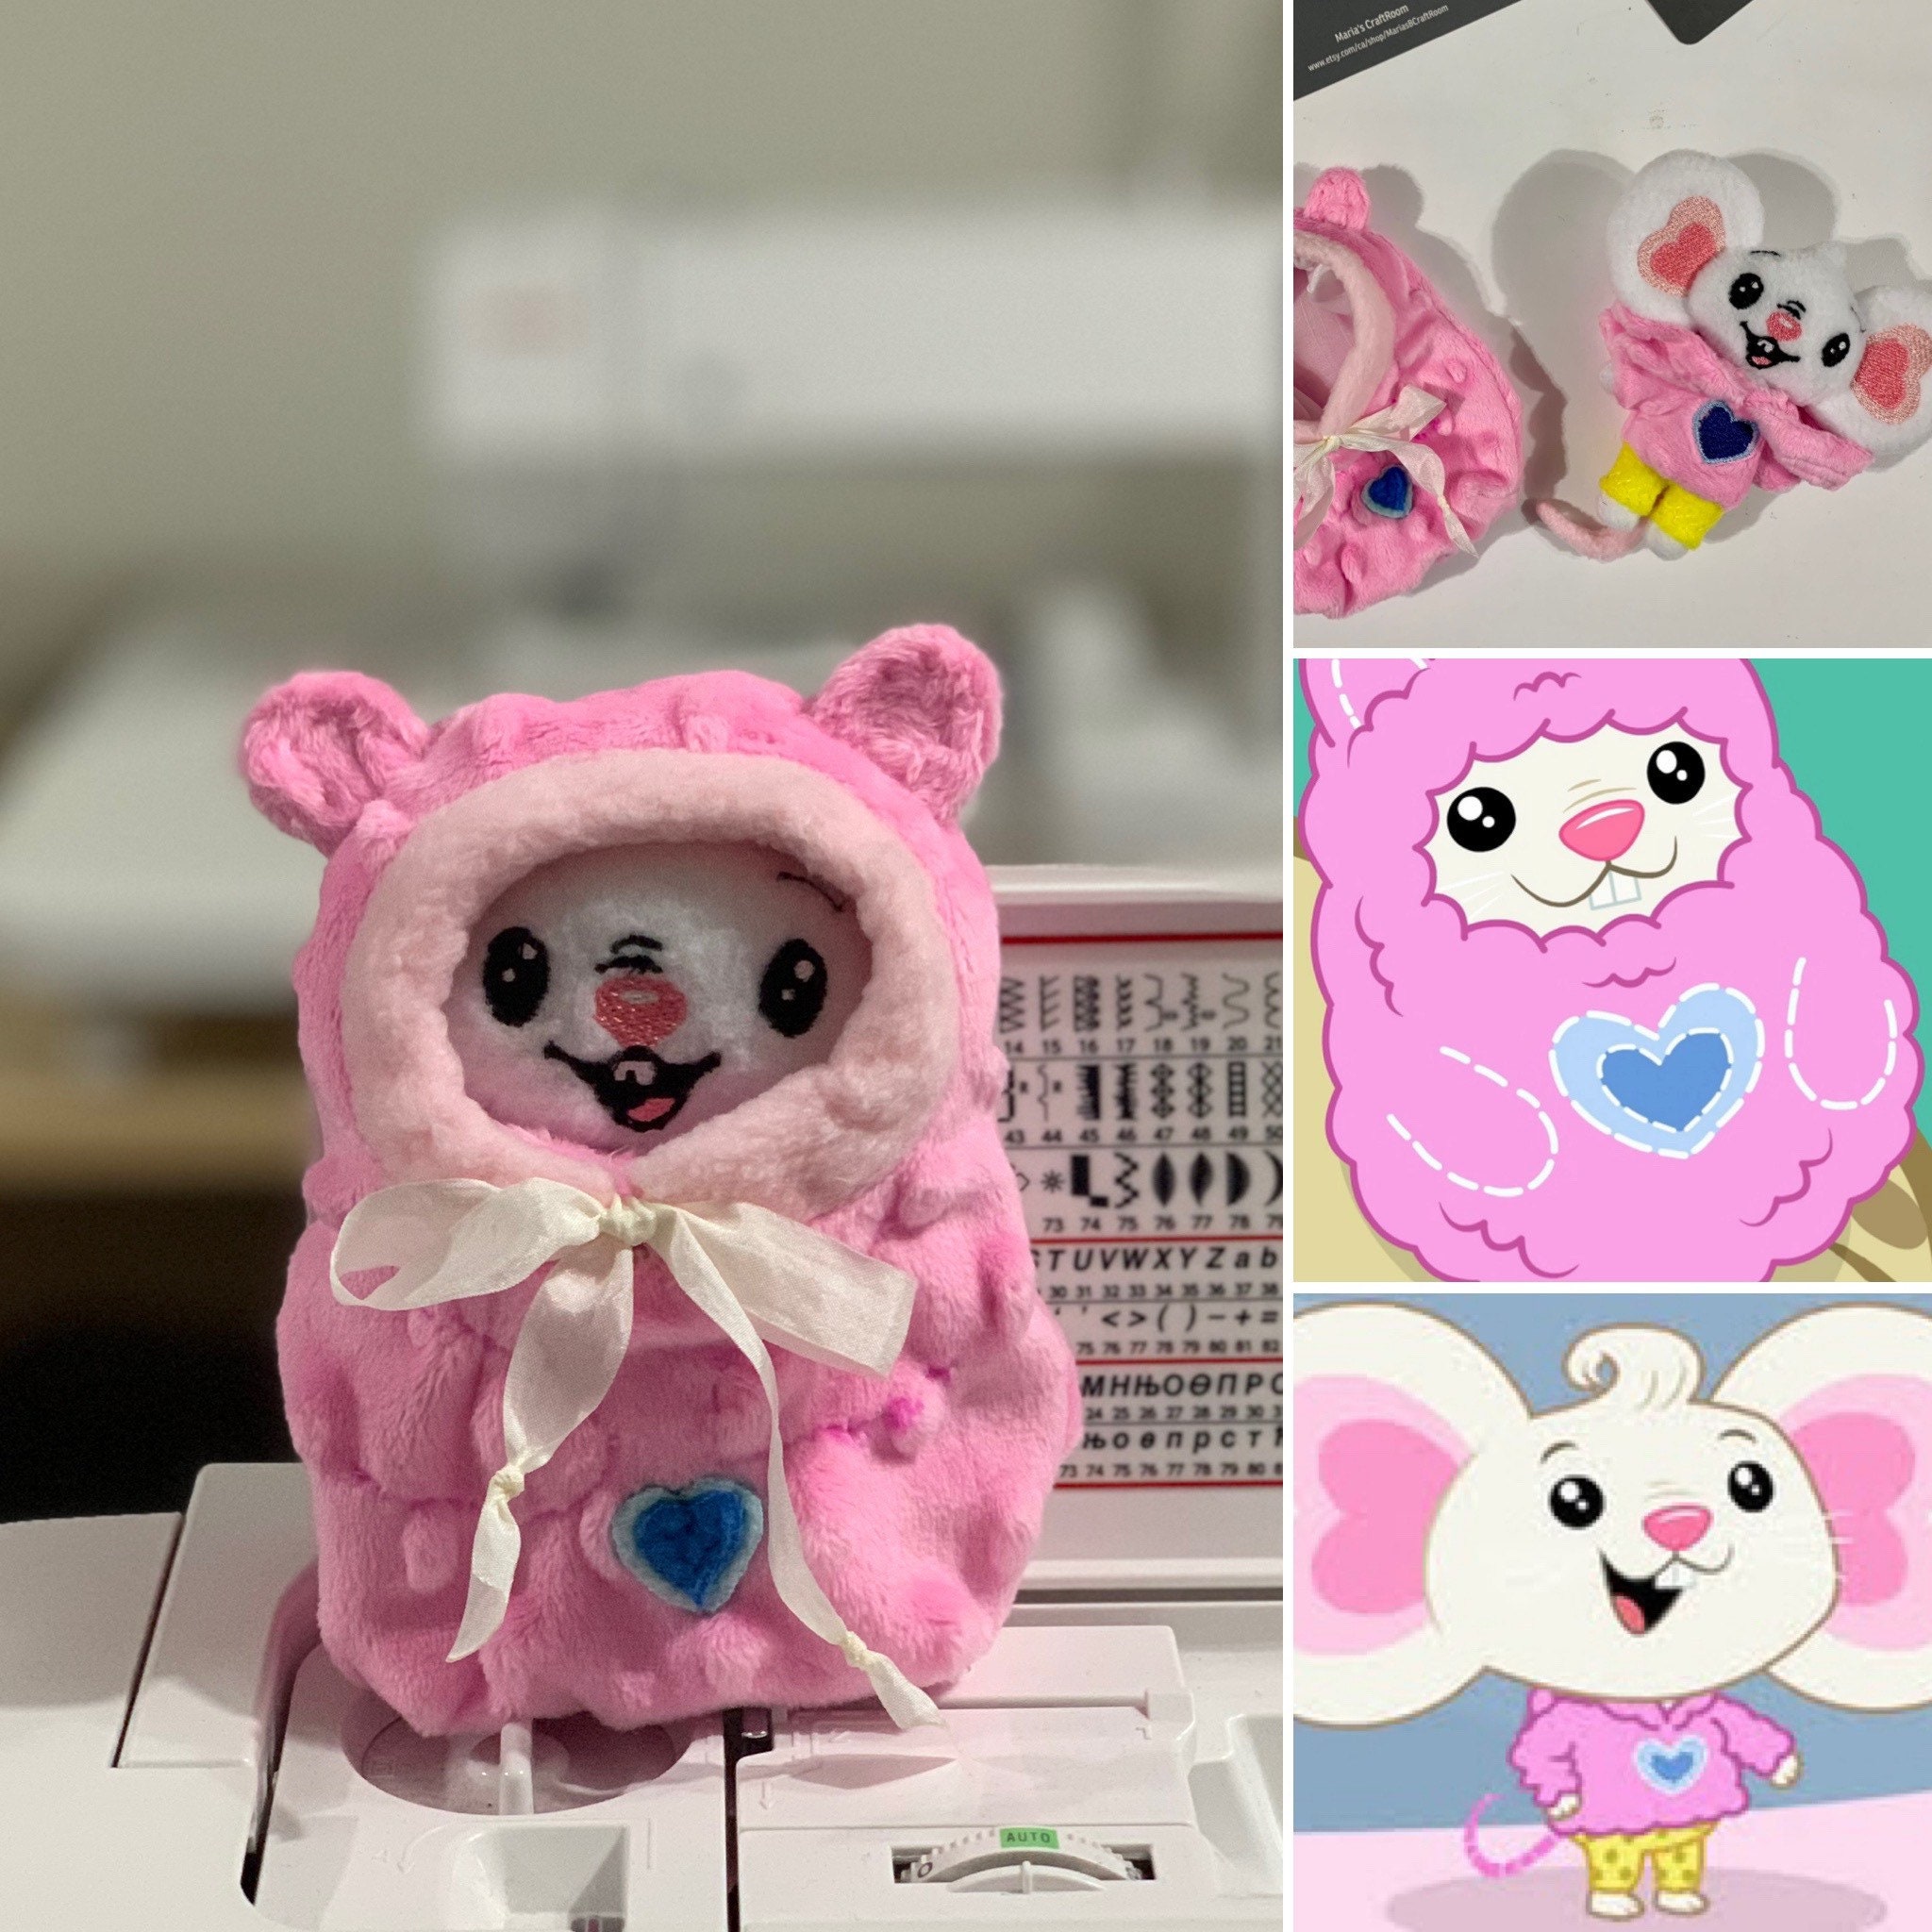 2pcs Chip and Potato Plush Toys Cartoon Pug Dog Plushie Animal Mouse Peluche Stuffed Animal Soft Toys for Kids